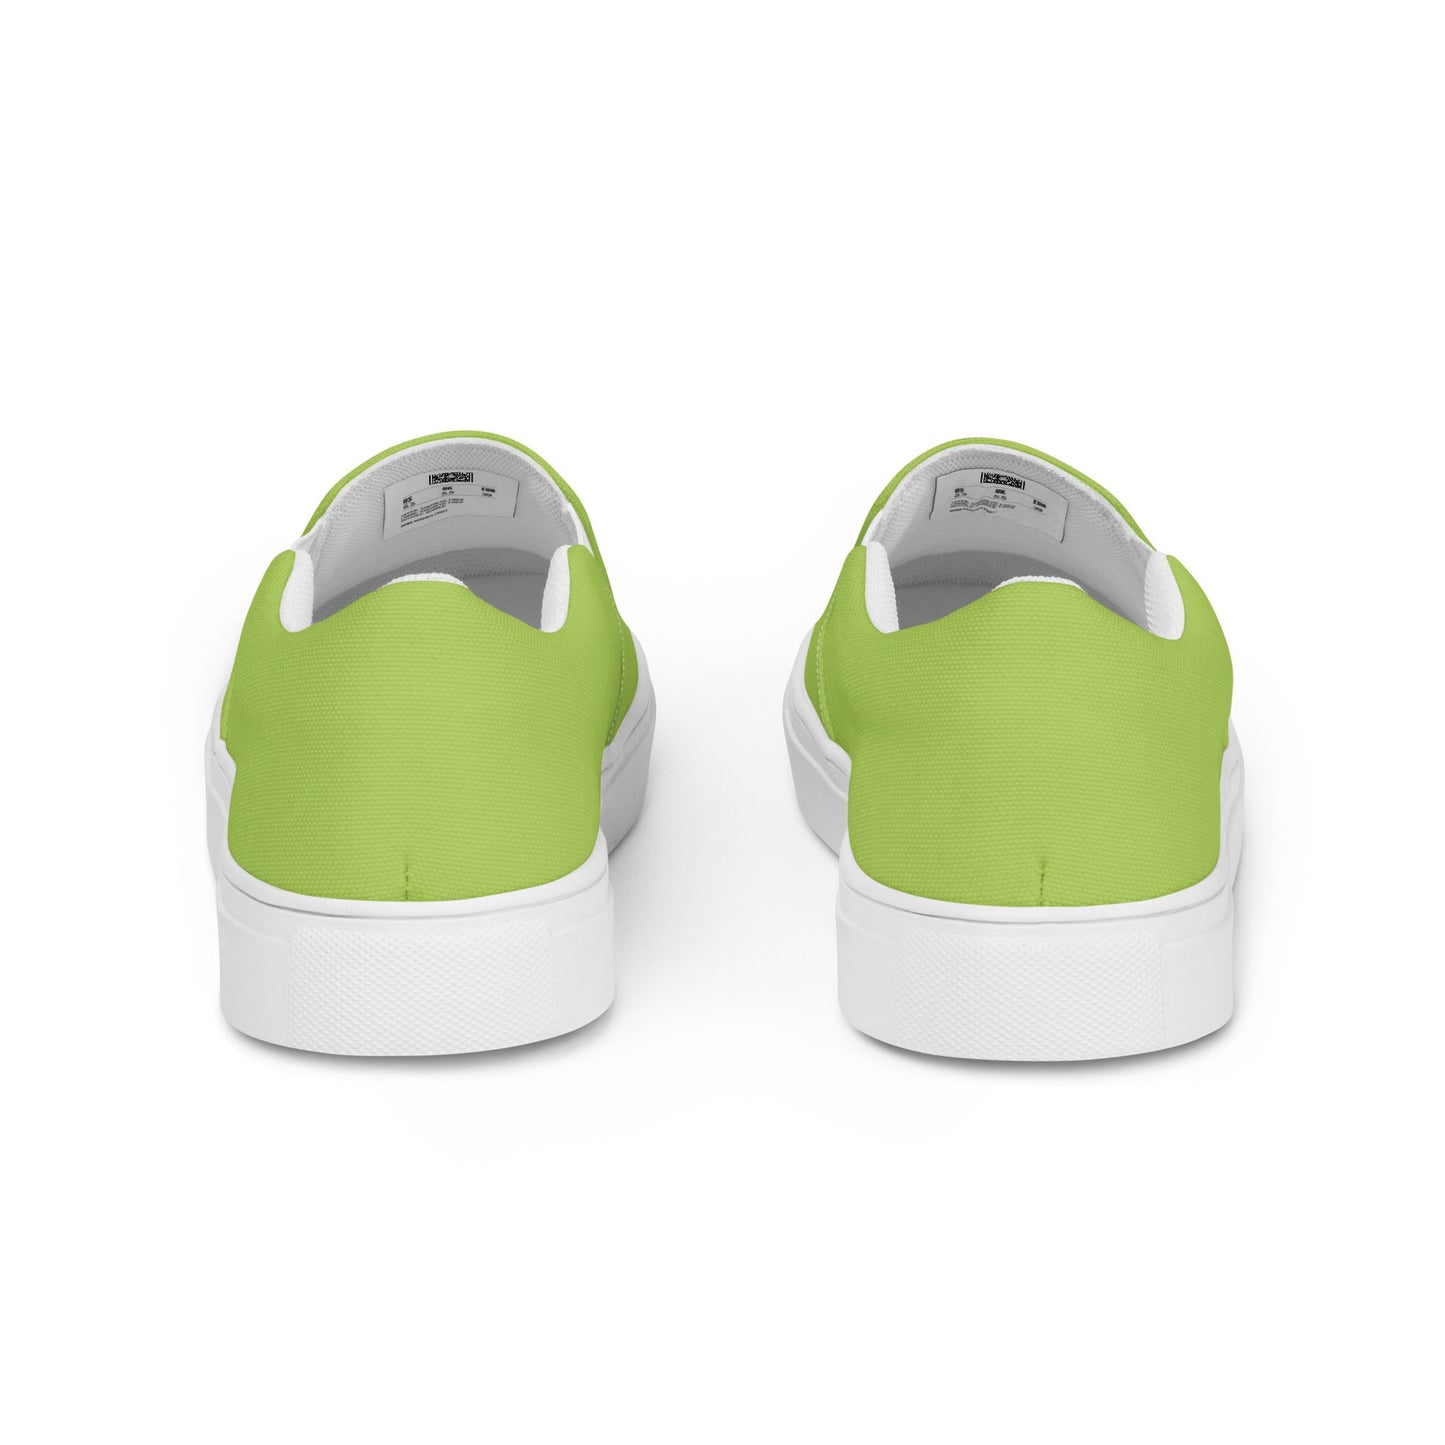 klasneakers Women’s slip-on canvas shoes - Light Olive